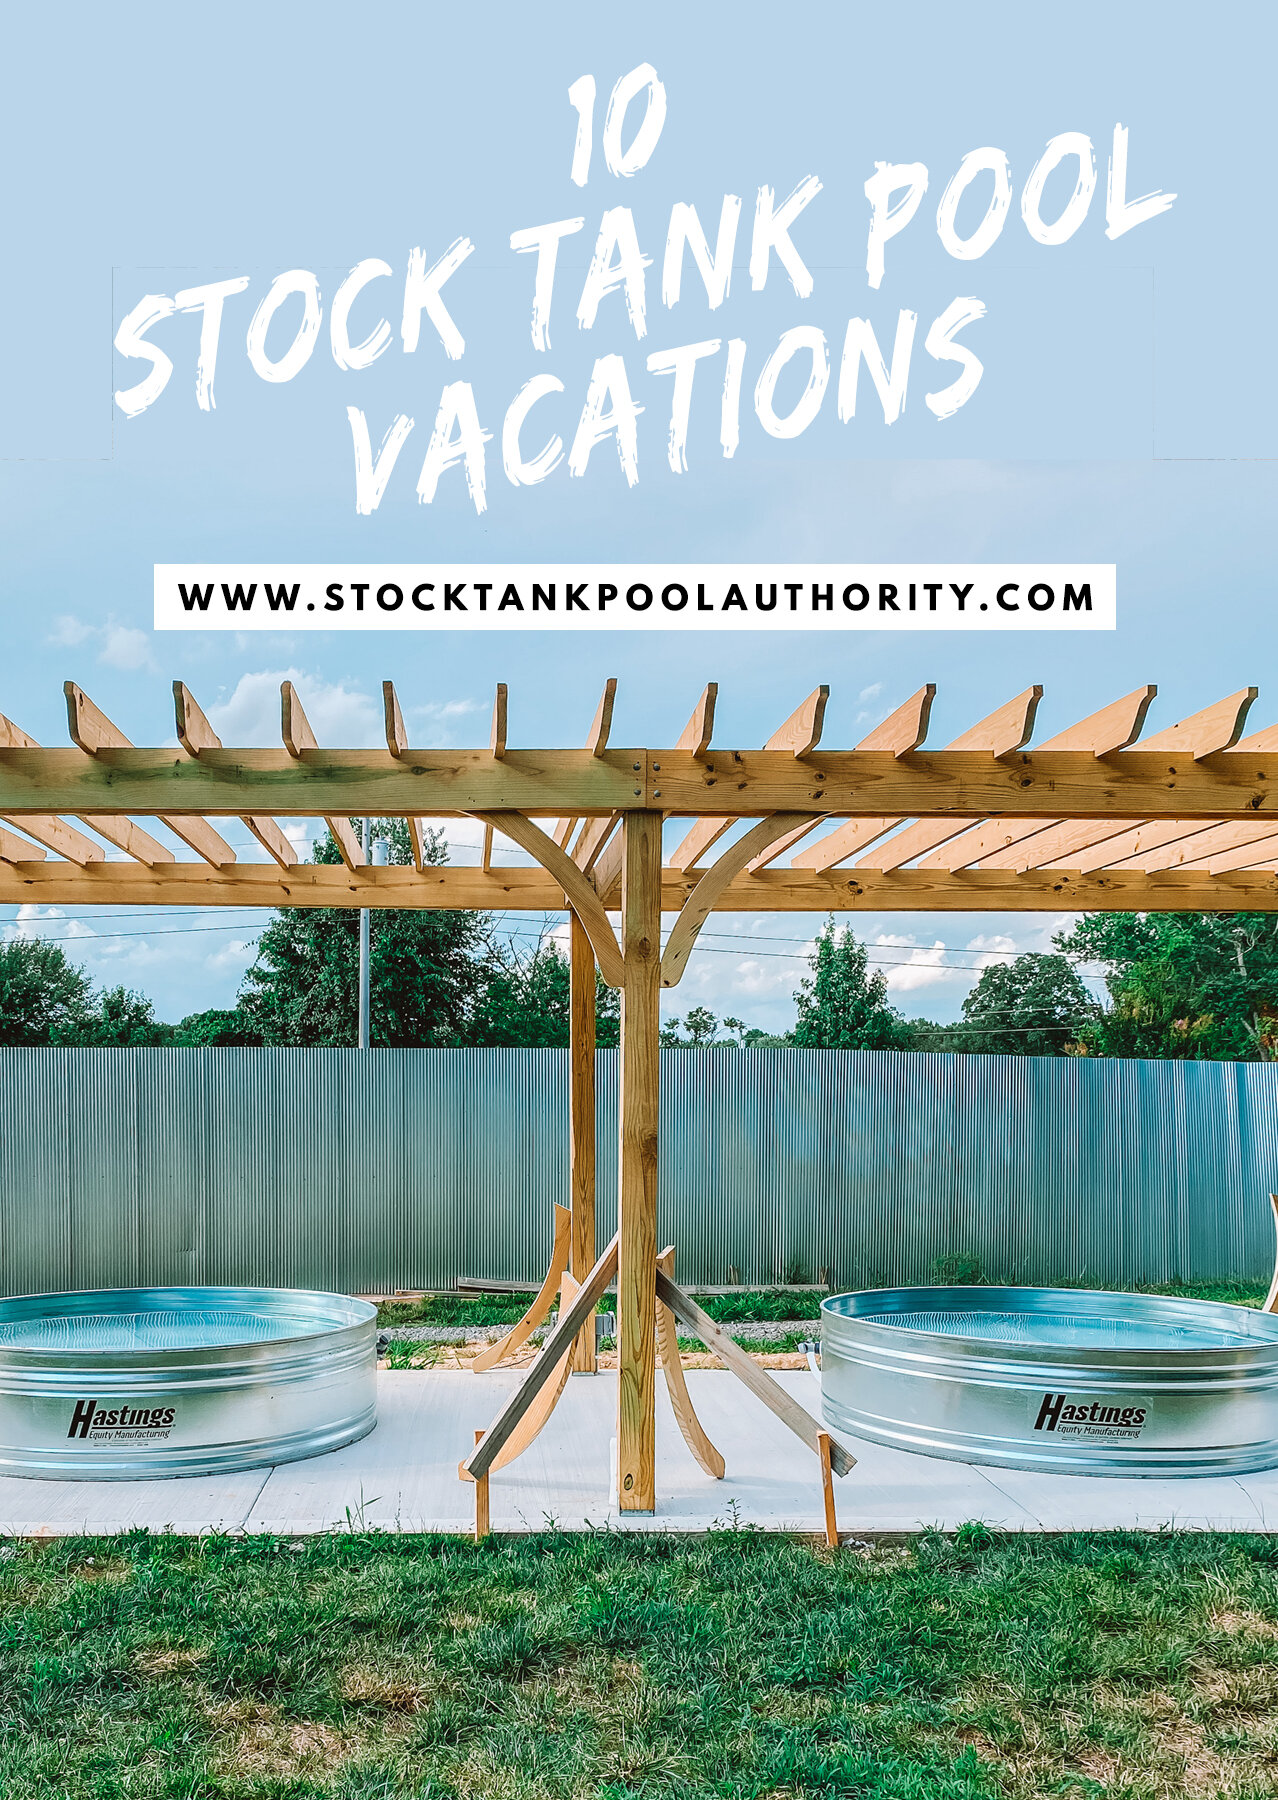 Stock Tank Pool Authority Pinterest Stock Tank Pool Vacations.psd 2.jpg